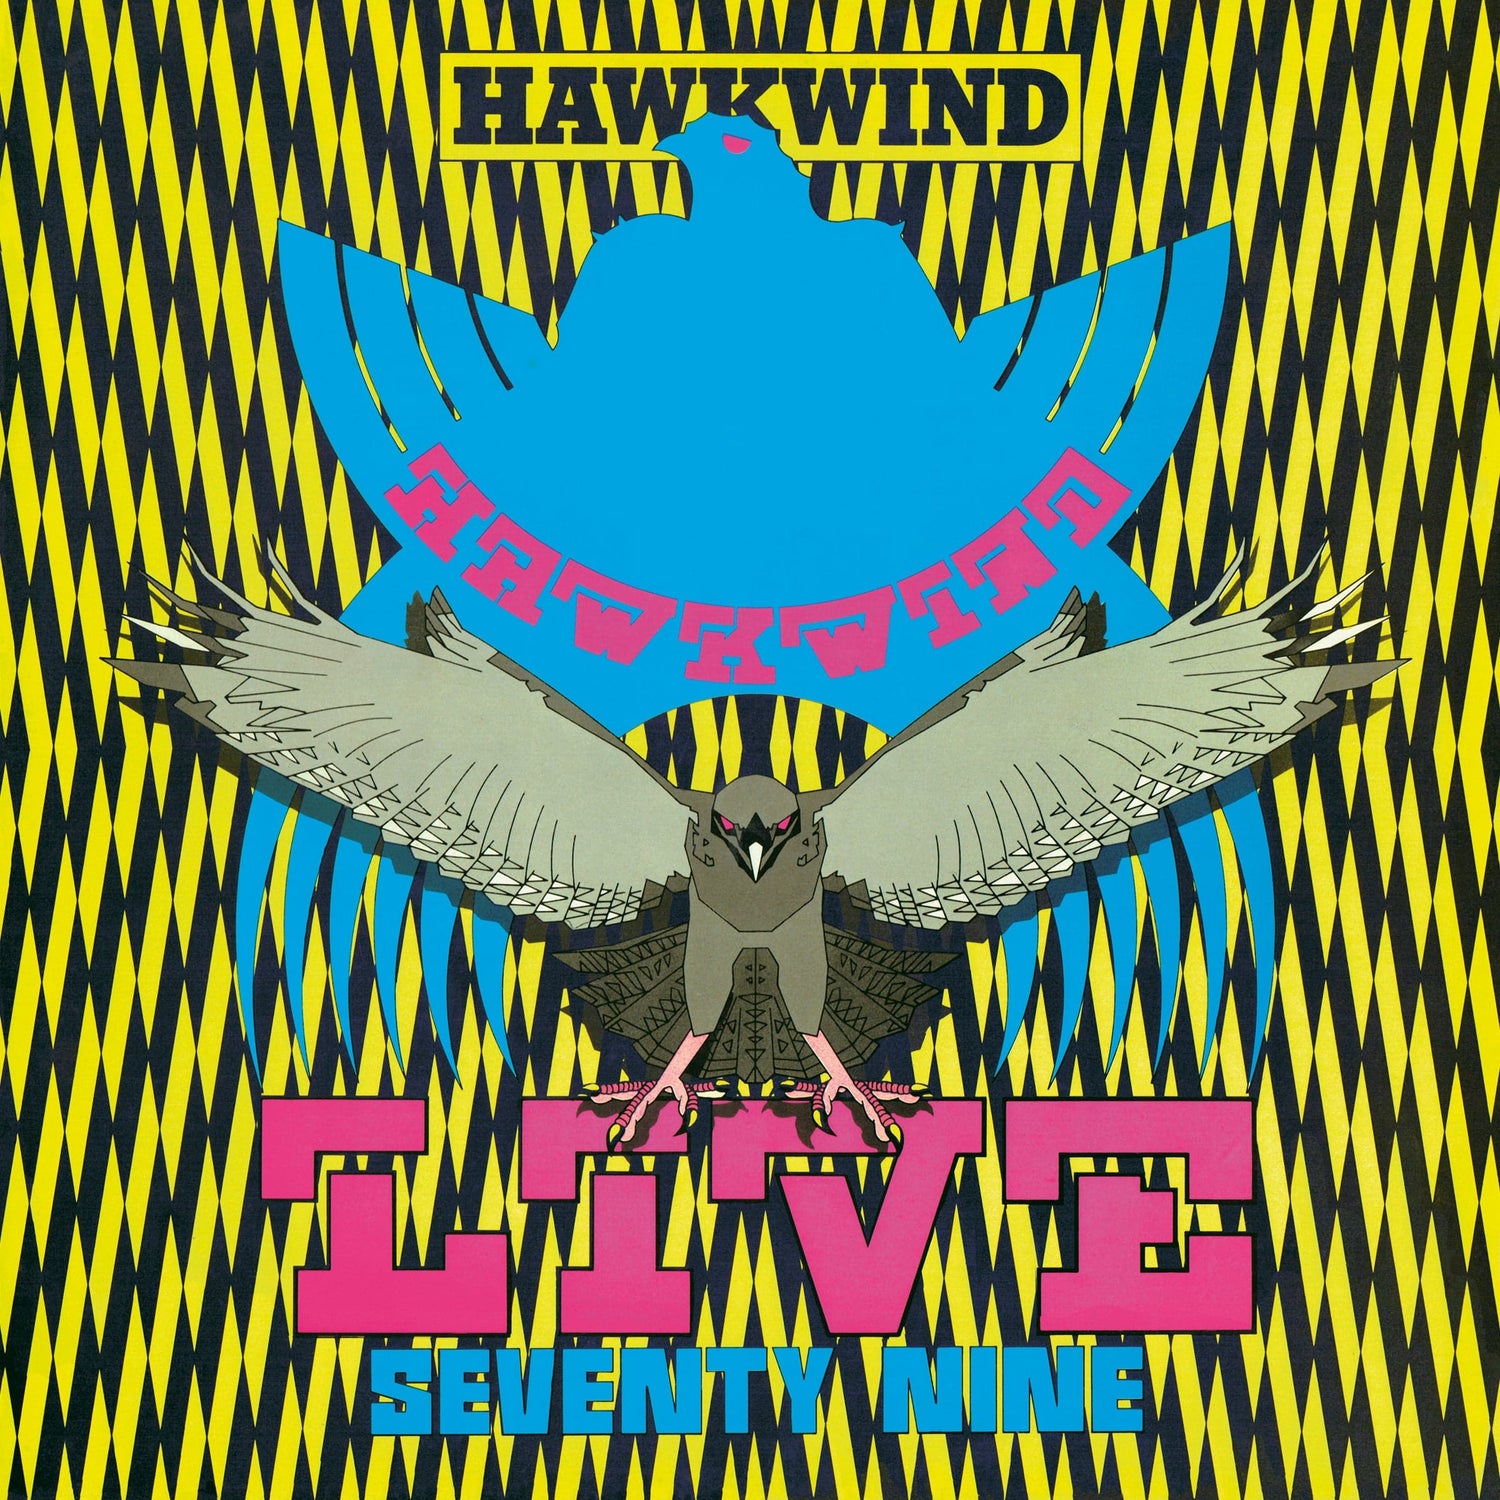 HAWKWIND: Live Seventy-Nine LP (clear vinyl)